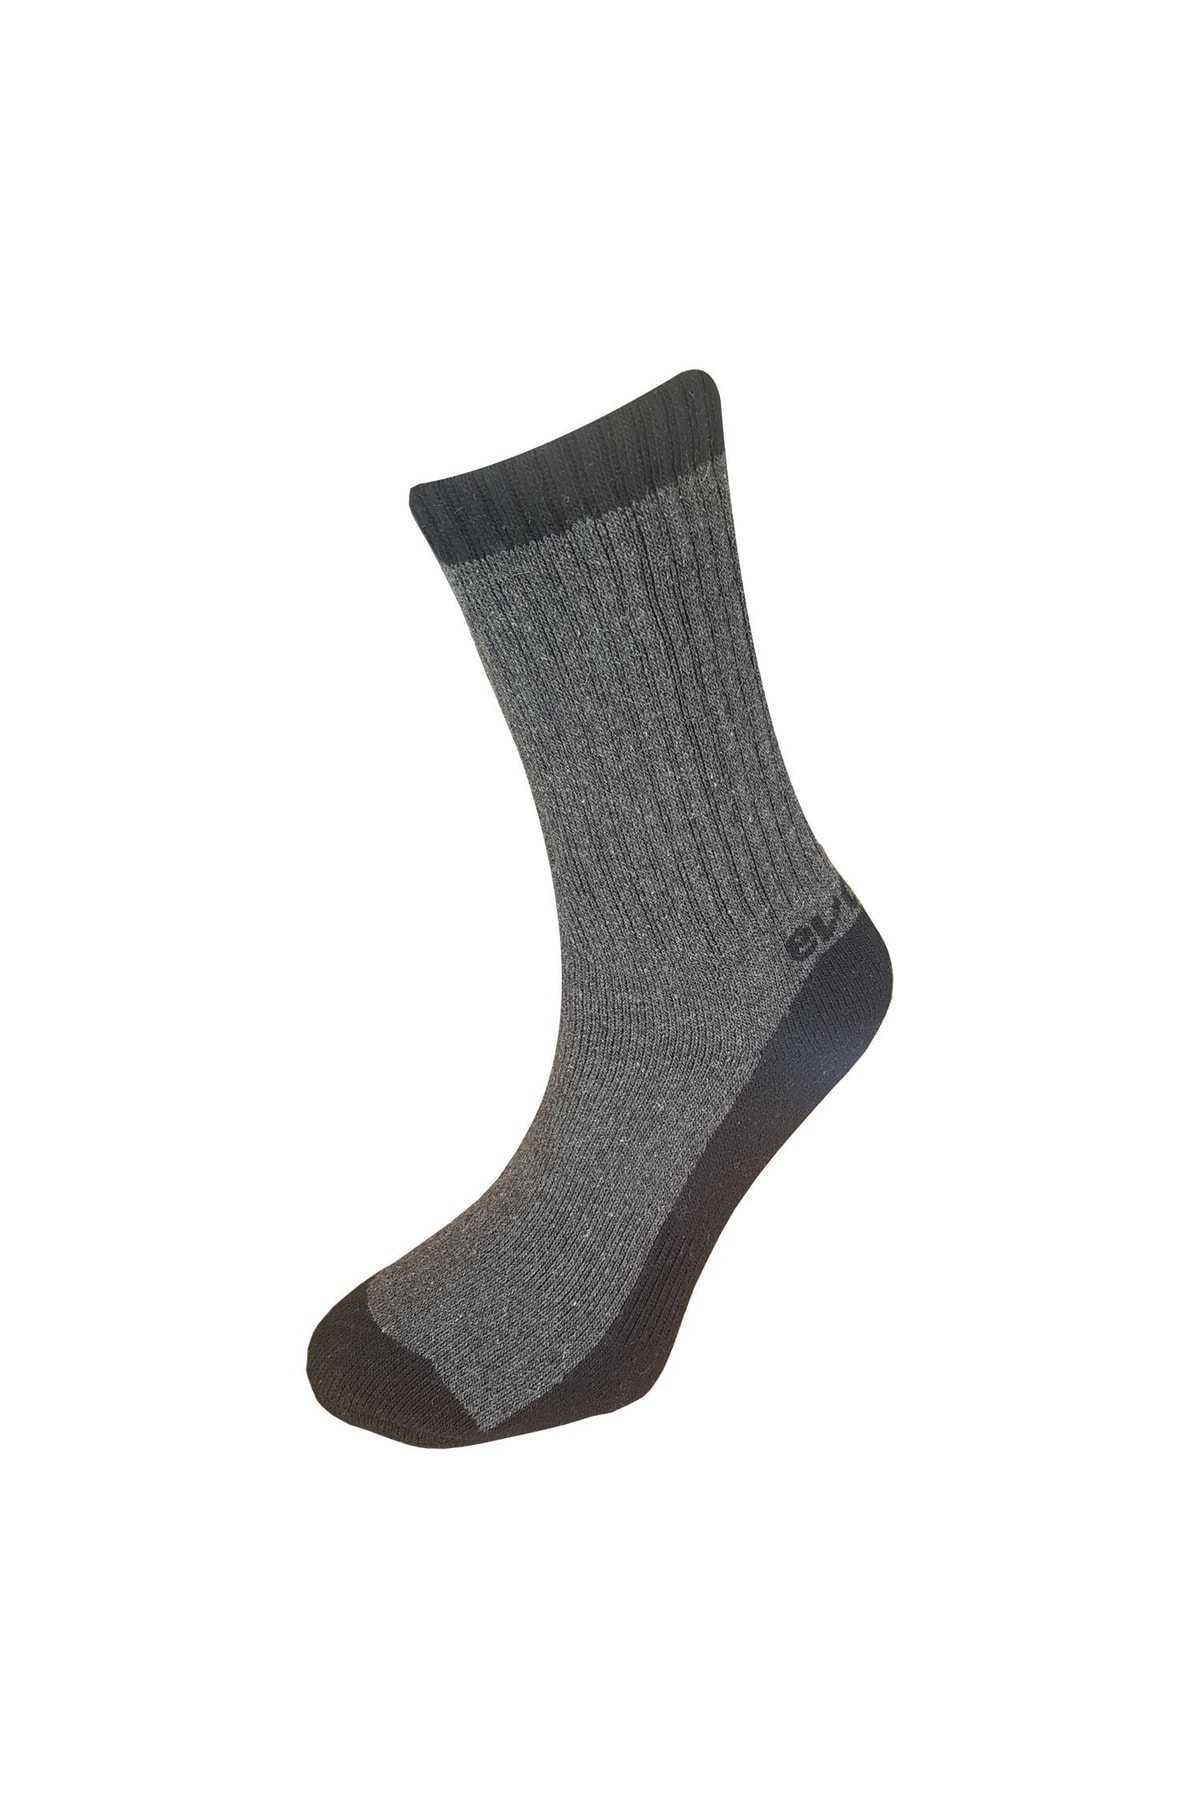 Evolite Vista Thermolite –12°c Kışlık Termal Çorap Siyah-35-38